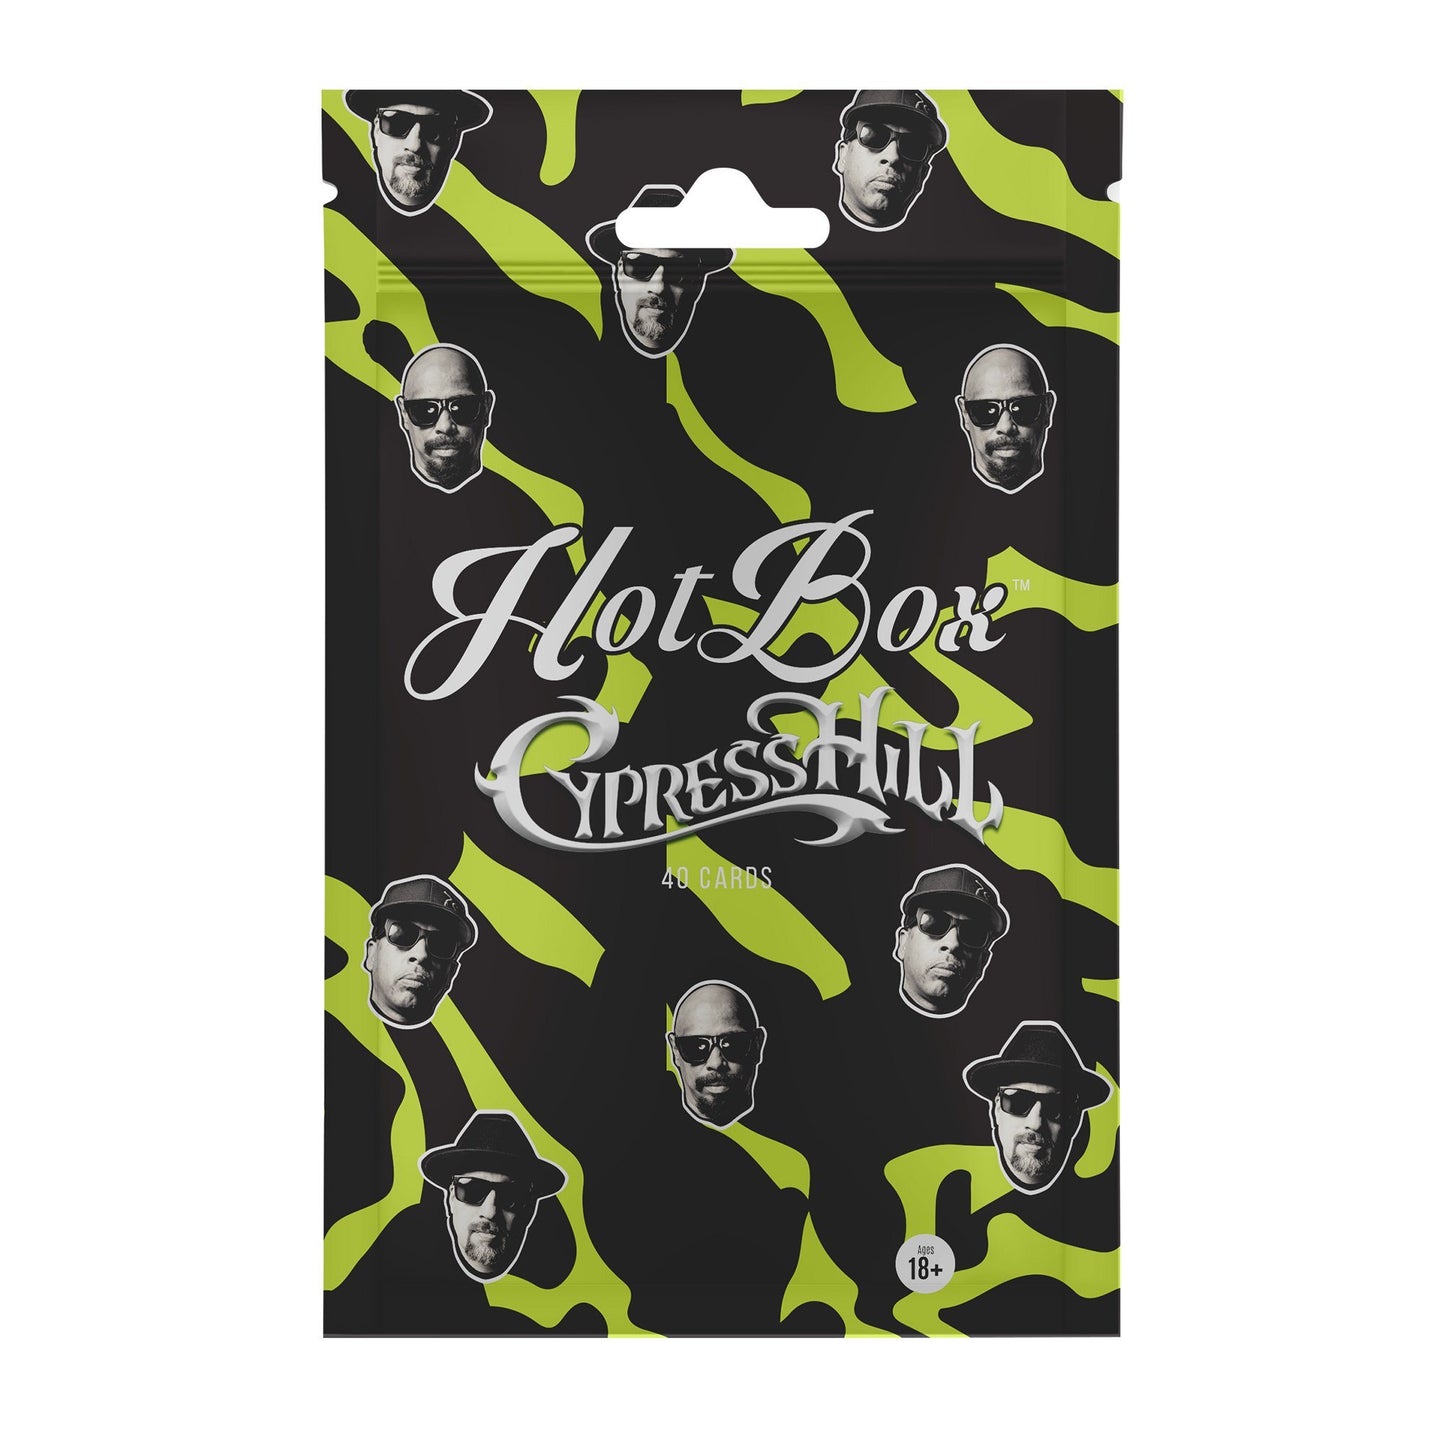 HotBox™ - Cypress Hill